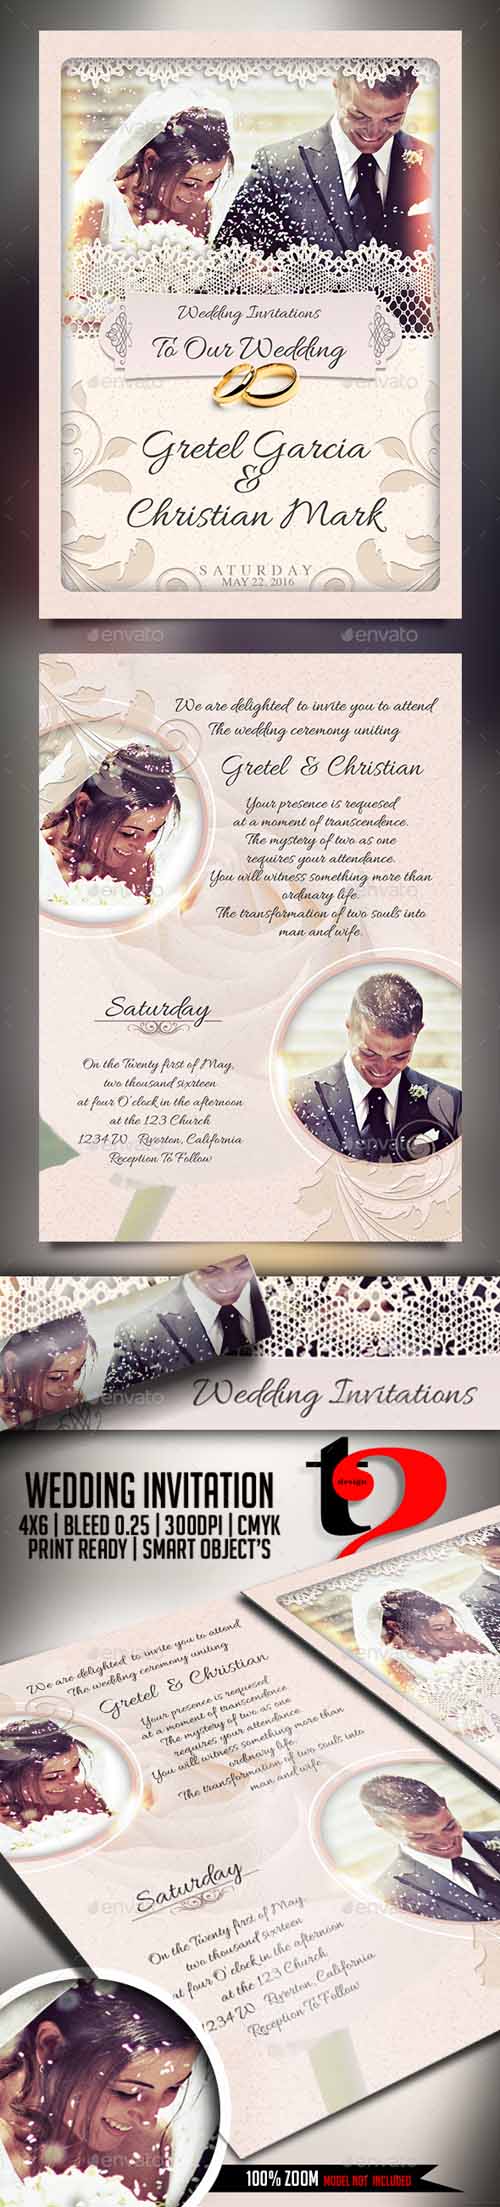 The Wedding Invitation id 14437640